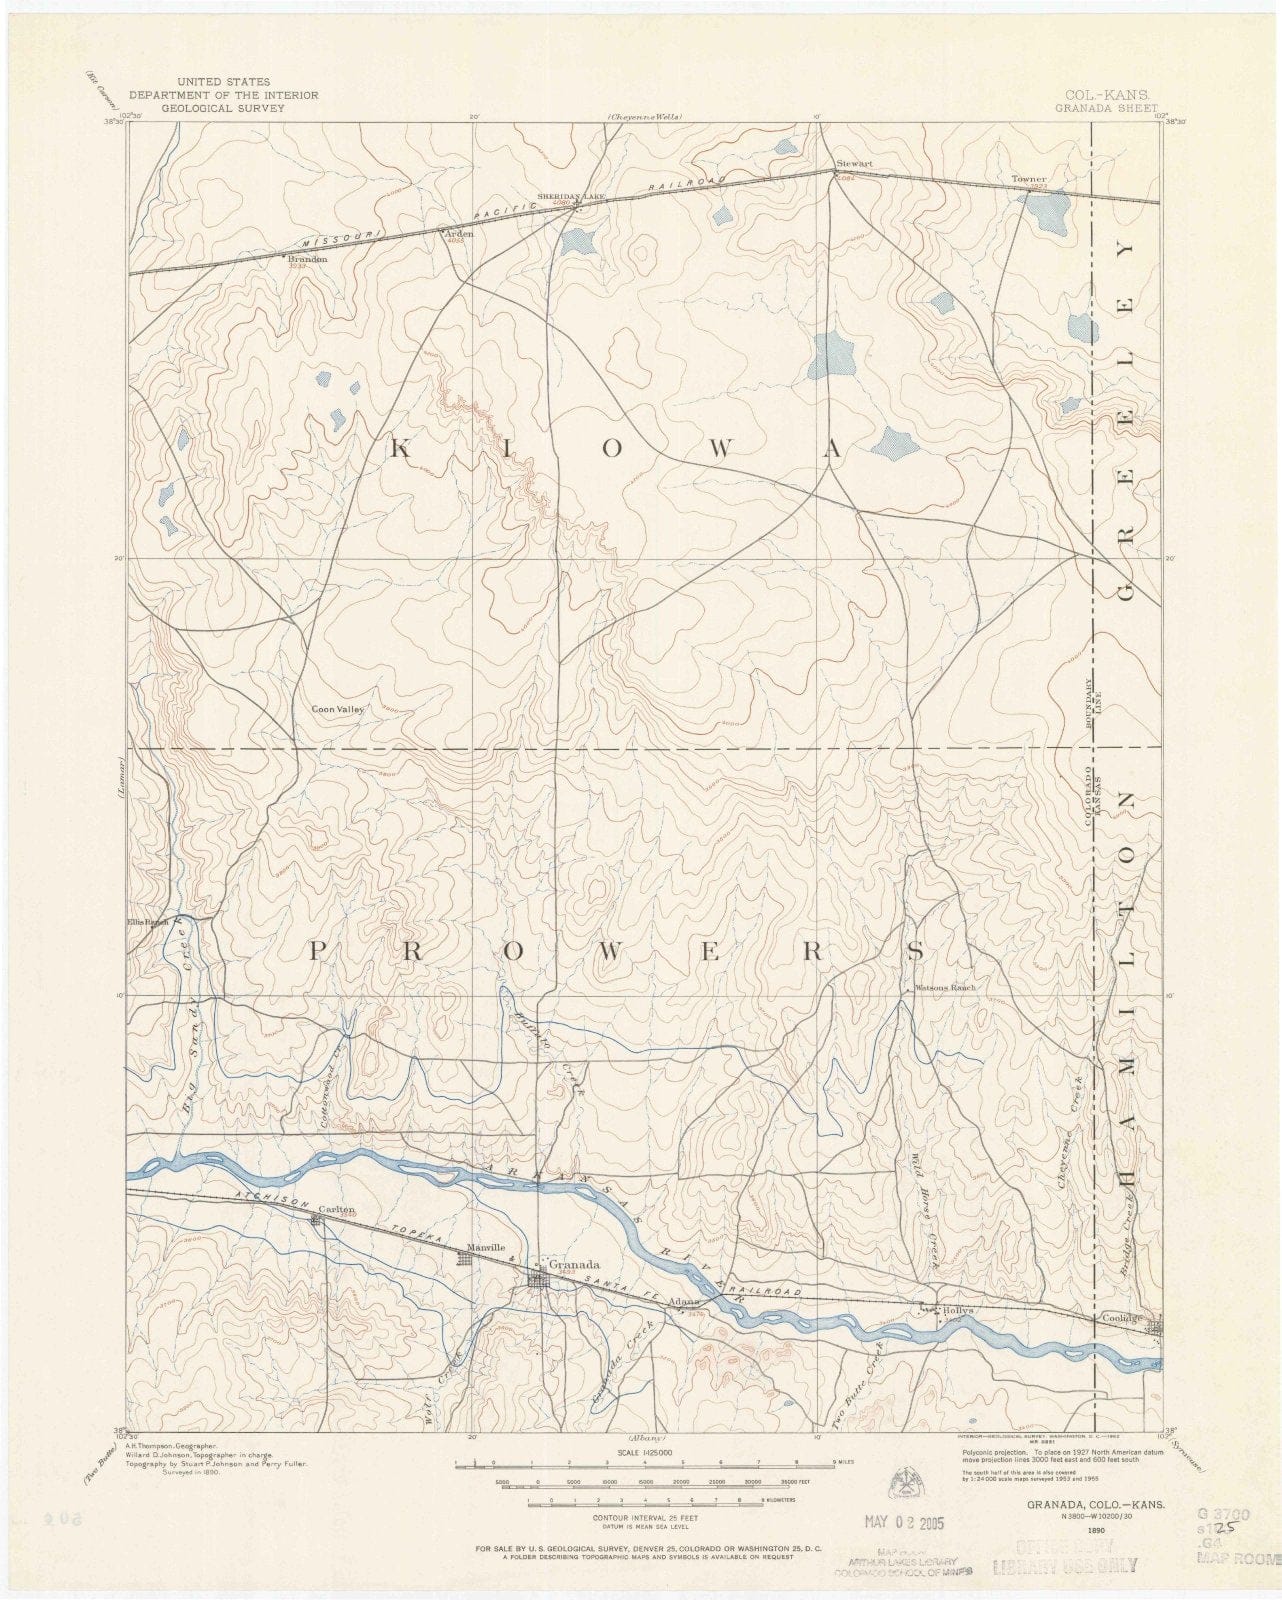 1890 Granada, CO - Colorado - USGS Topographic Map